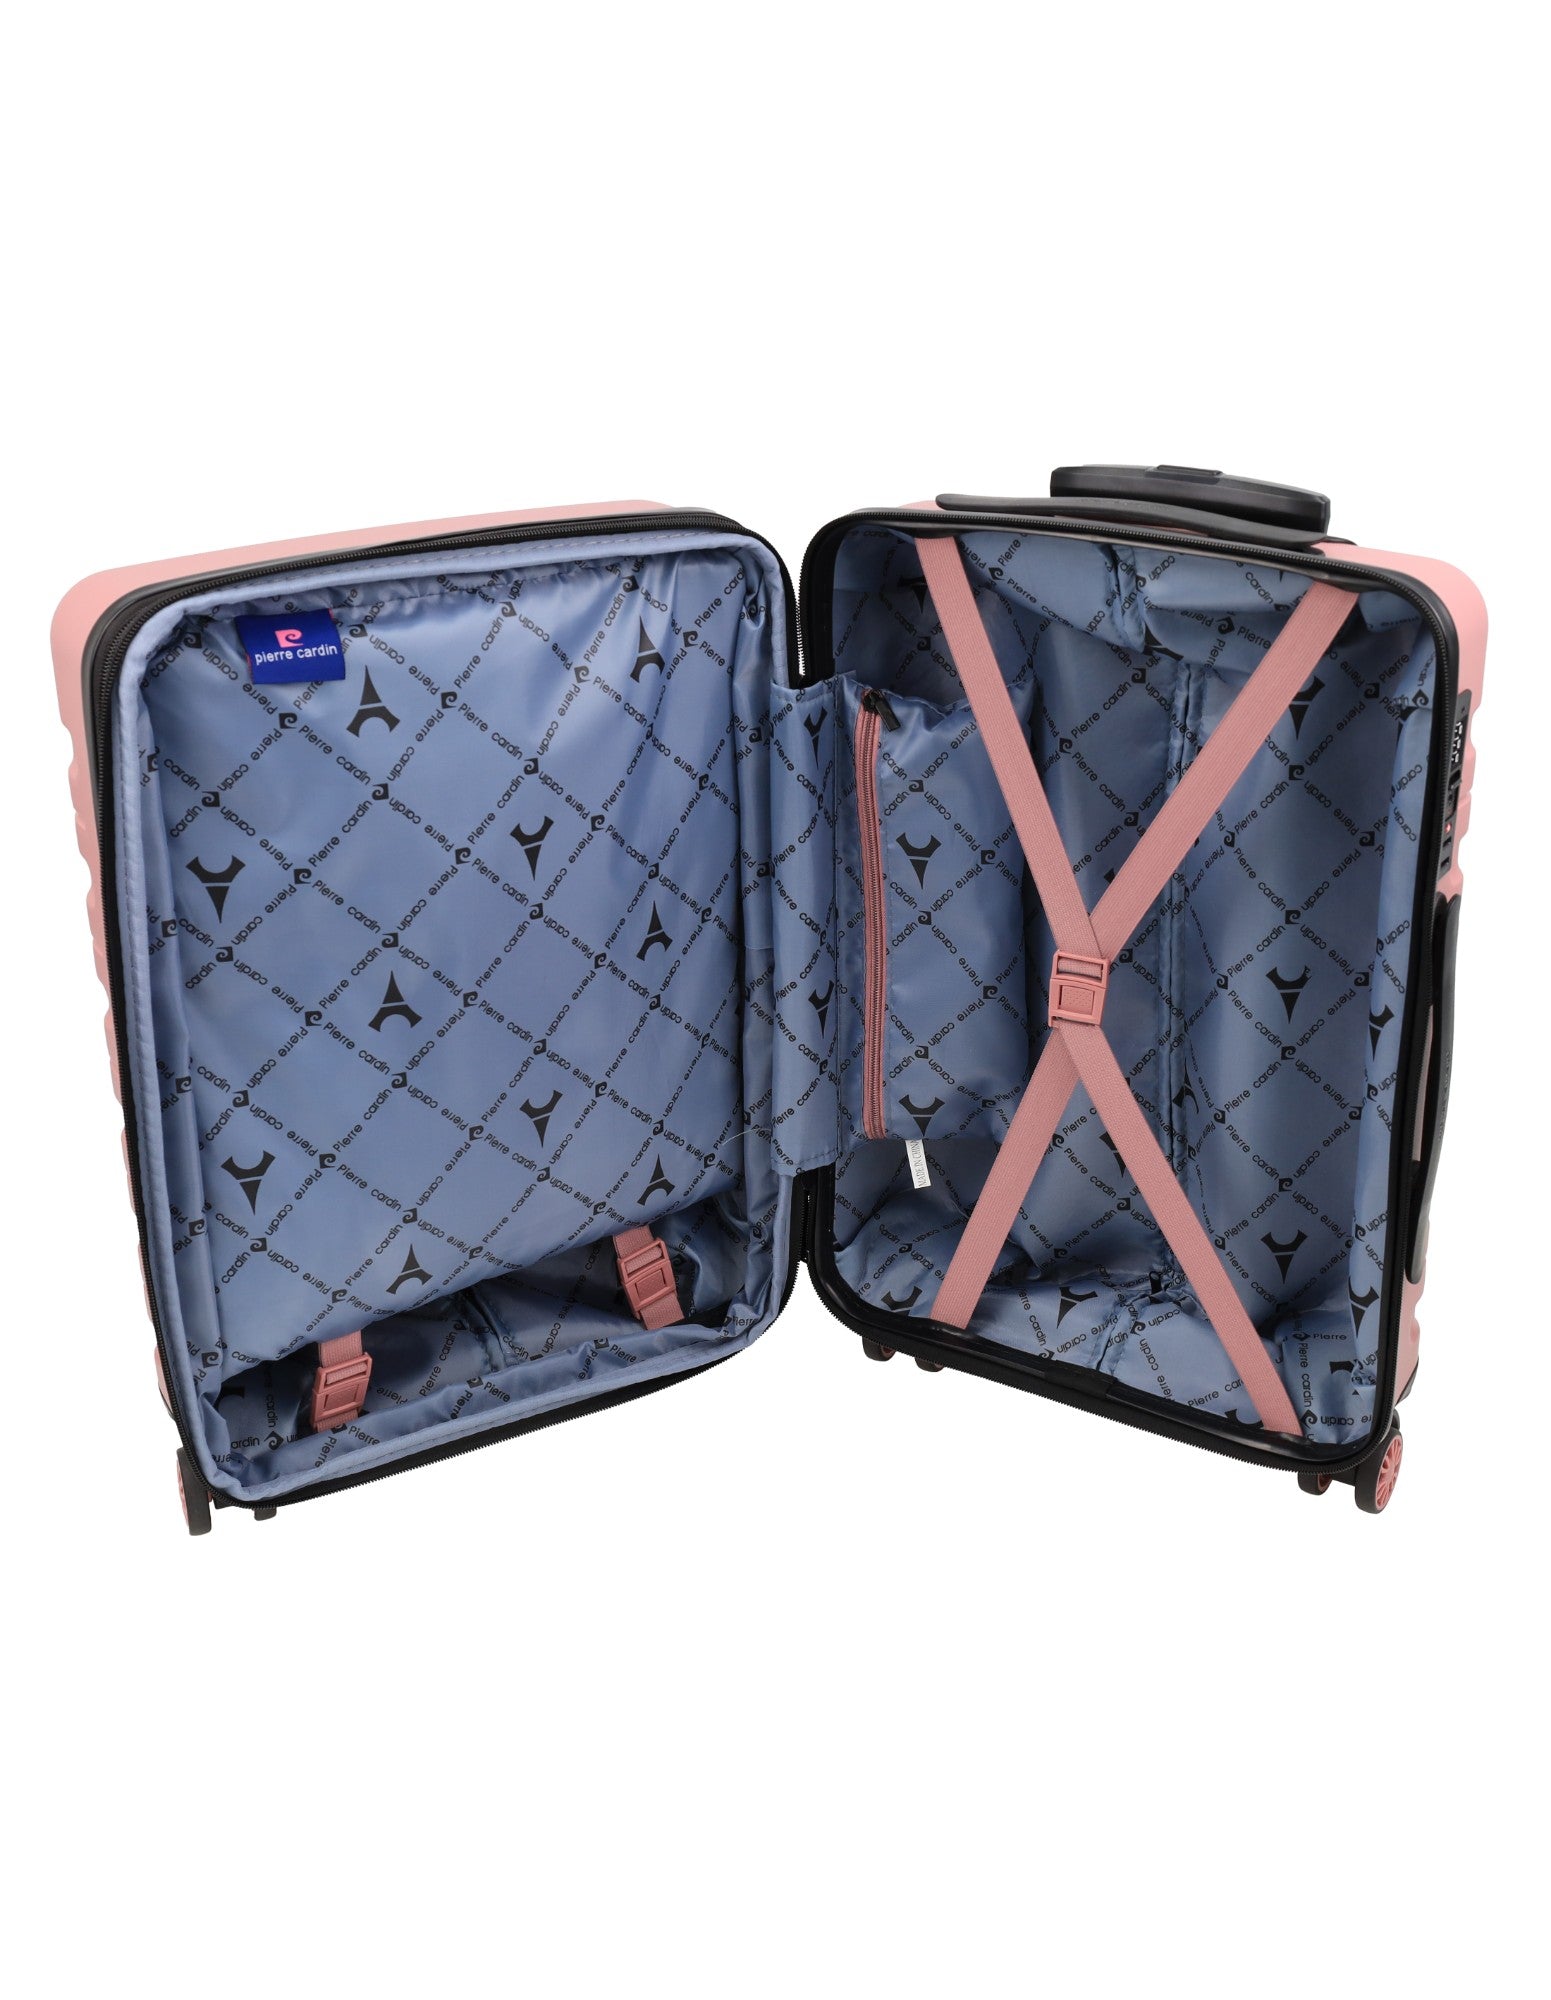 Pierre Cardin Hard-shell 3-Piece Luggage Set in Black